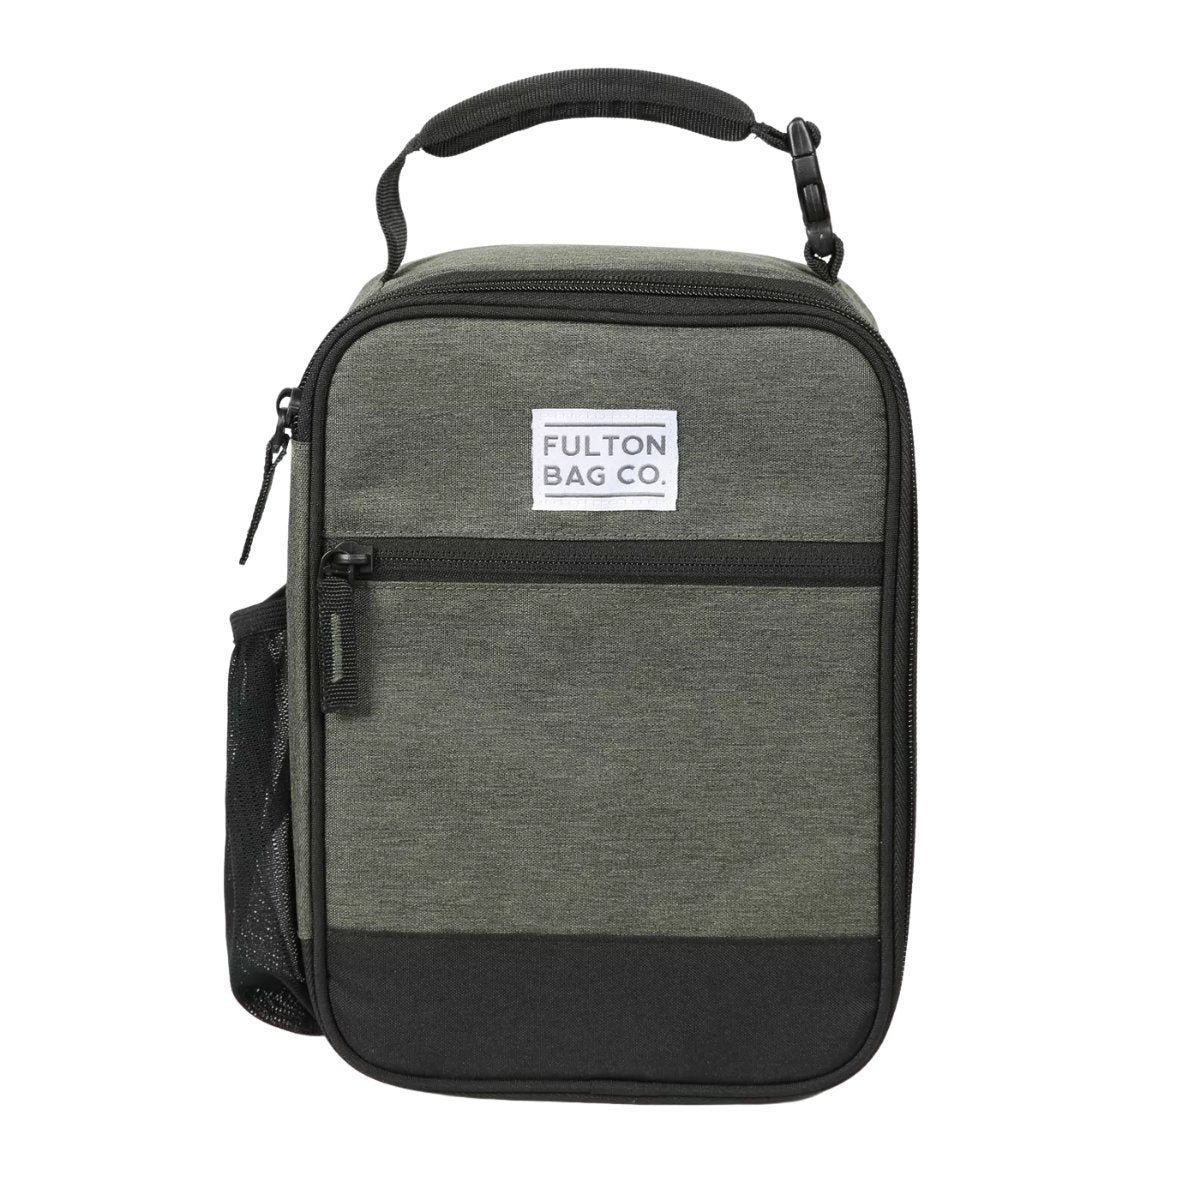 Fulton Bag Co. Upright Lunch Bag Dusty Olive